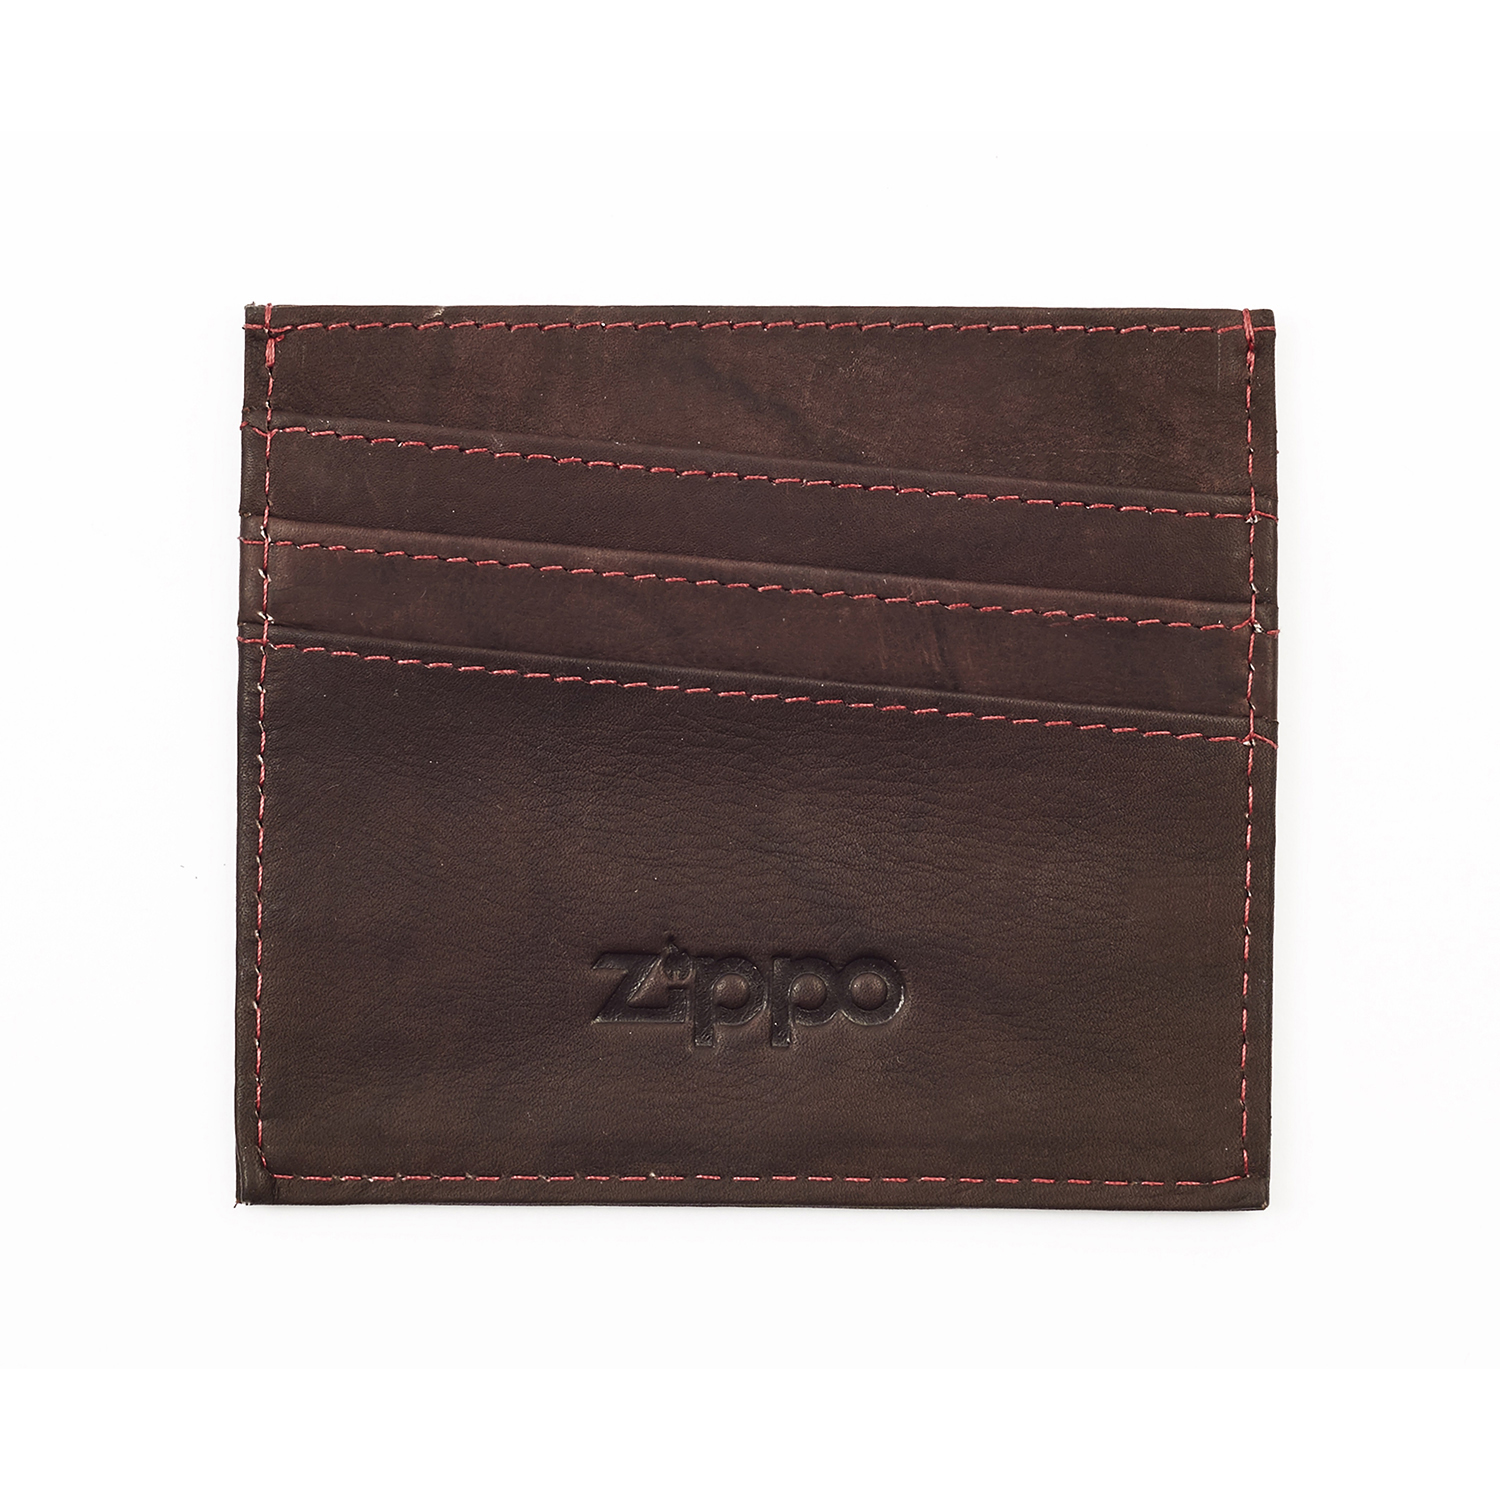 Kreditkartenetui ZIPPO Leder braun 5 Kreditkarten 10x8,7x0,5cm 2005128